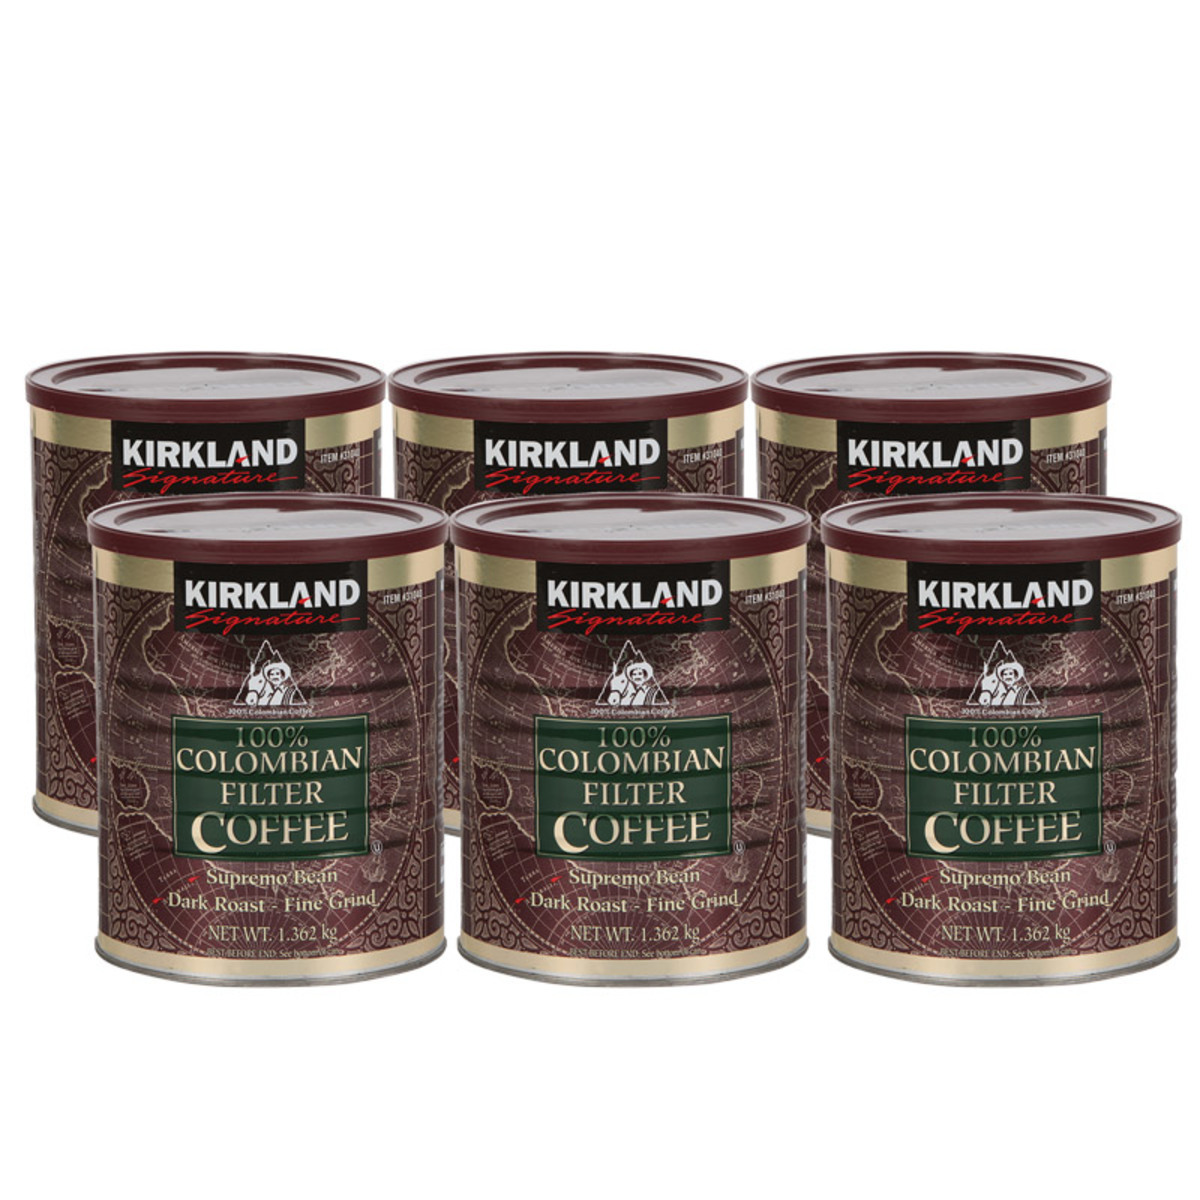 Kirkland Signature 100% Colombian Ground Filter Coffee, 6 x 1.362kg